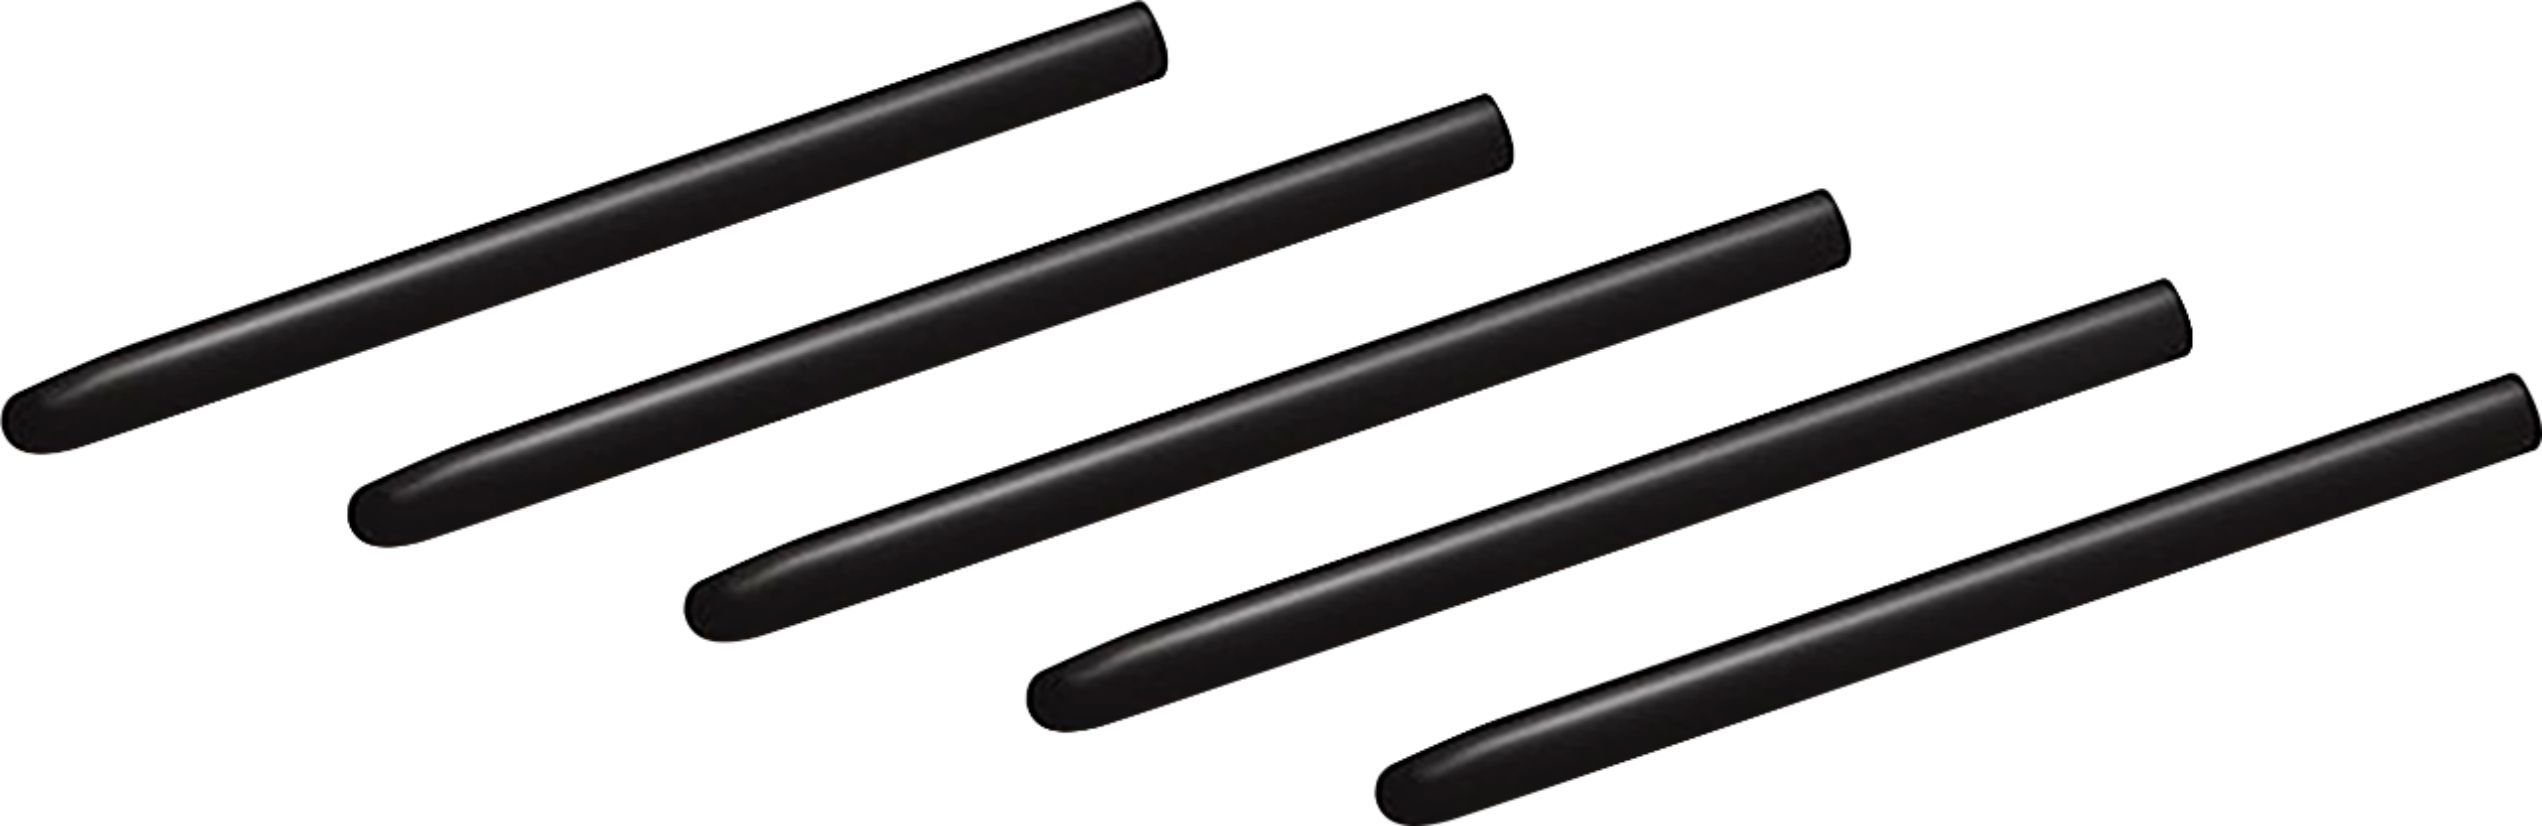 Varfuri Pen Wacom Standard Nibs, compatibil Intuos, Intuos Pro, Cintiq 13` 22` 27`, Pachet 5 buc, Negru